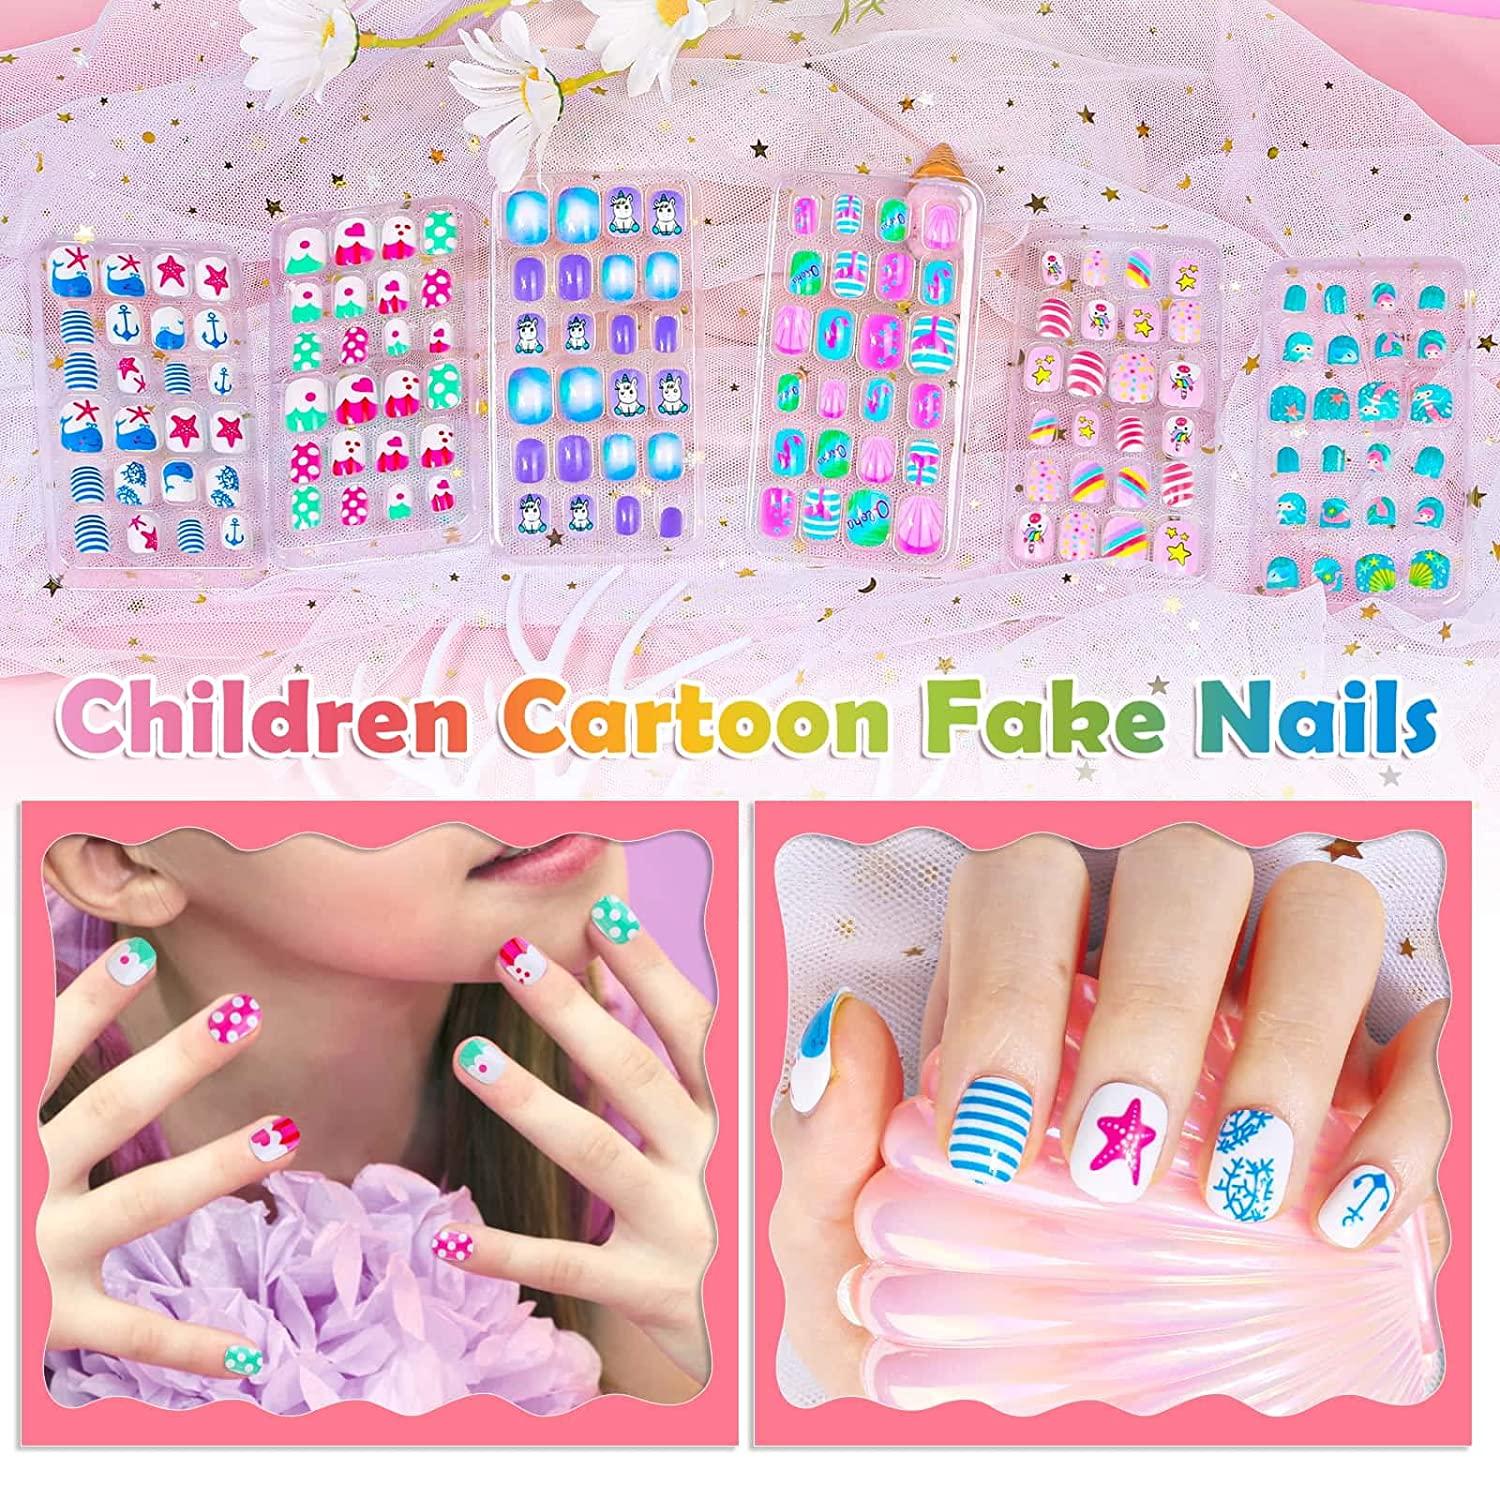 nails designs for short nails for kids